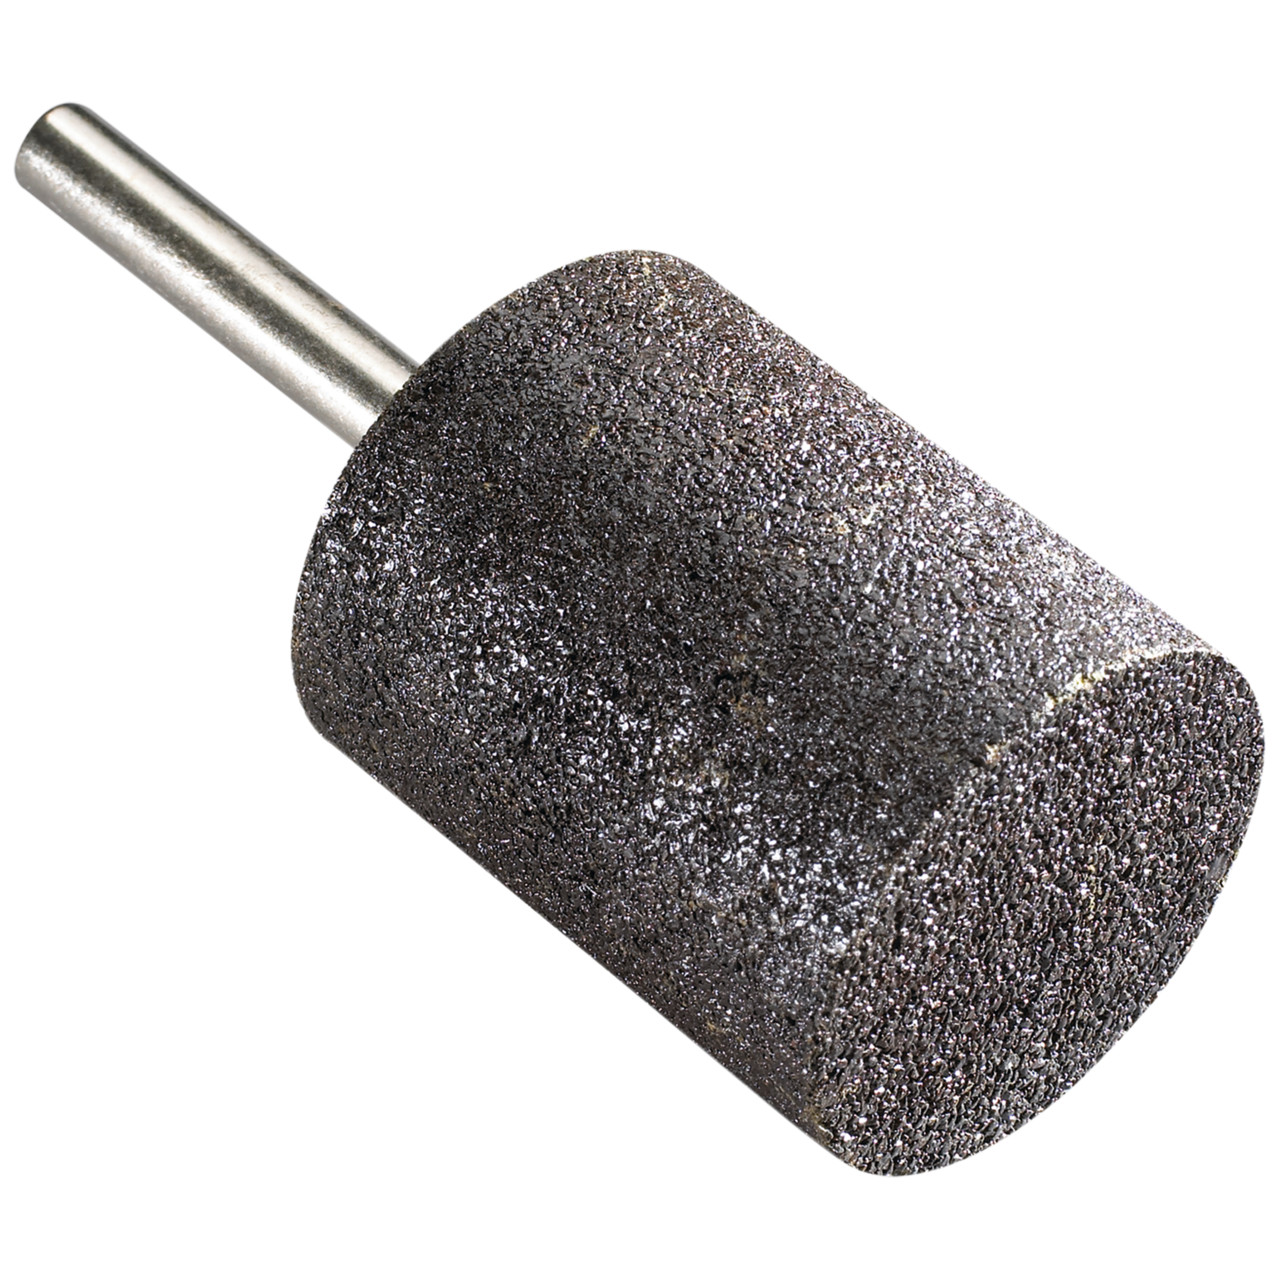 Tyrolit Punti montati in resina DxT-SxL 20x25-6x40 Per ghisa, forma: 52ZY - cilindro (punto montato), Art. 105367